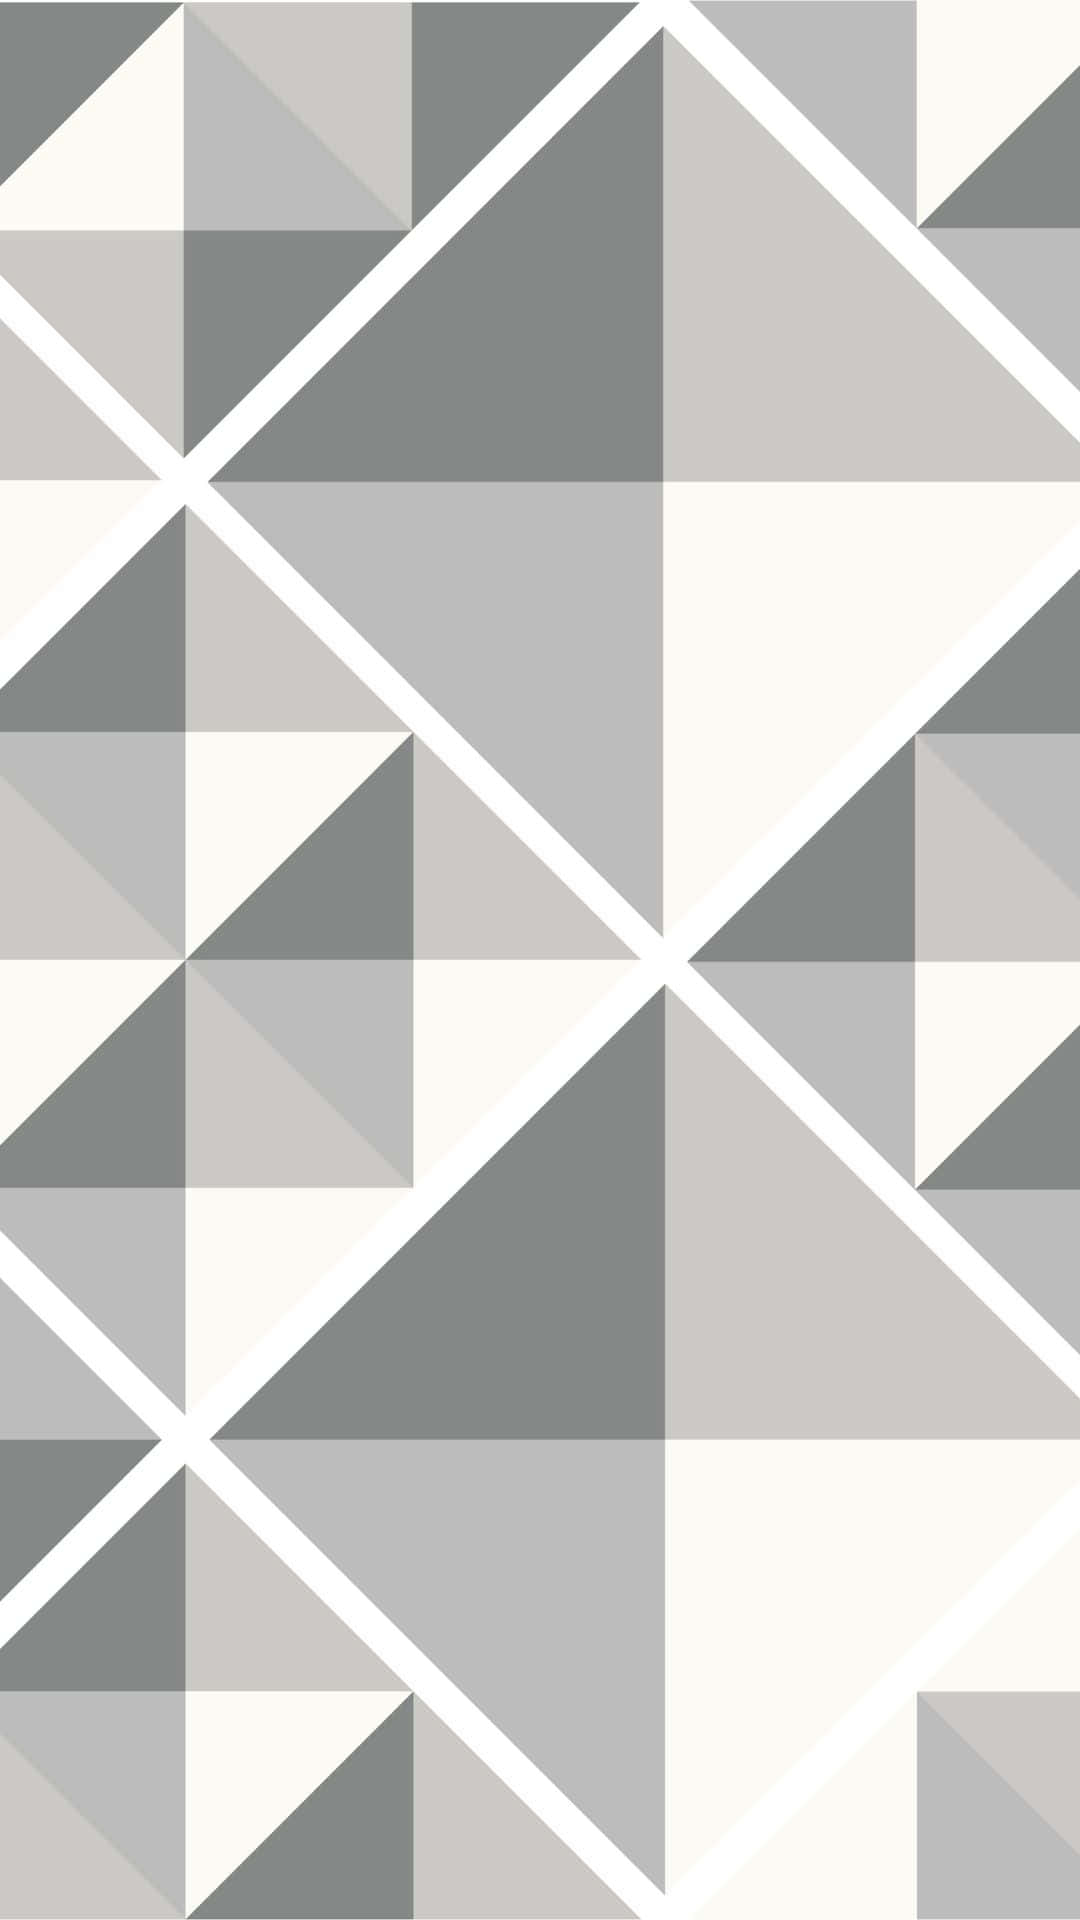 a gray and white geometric pattern